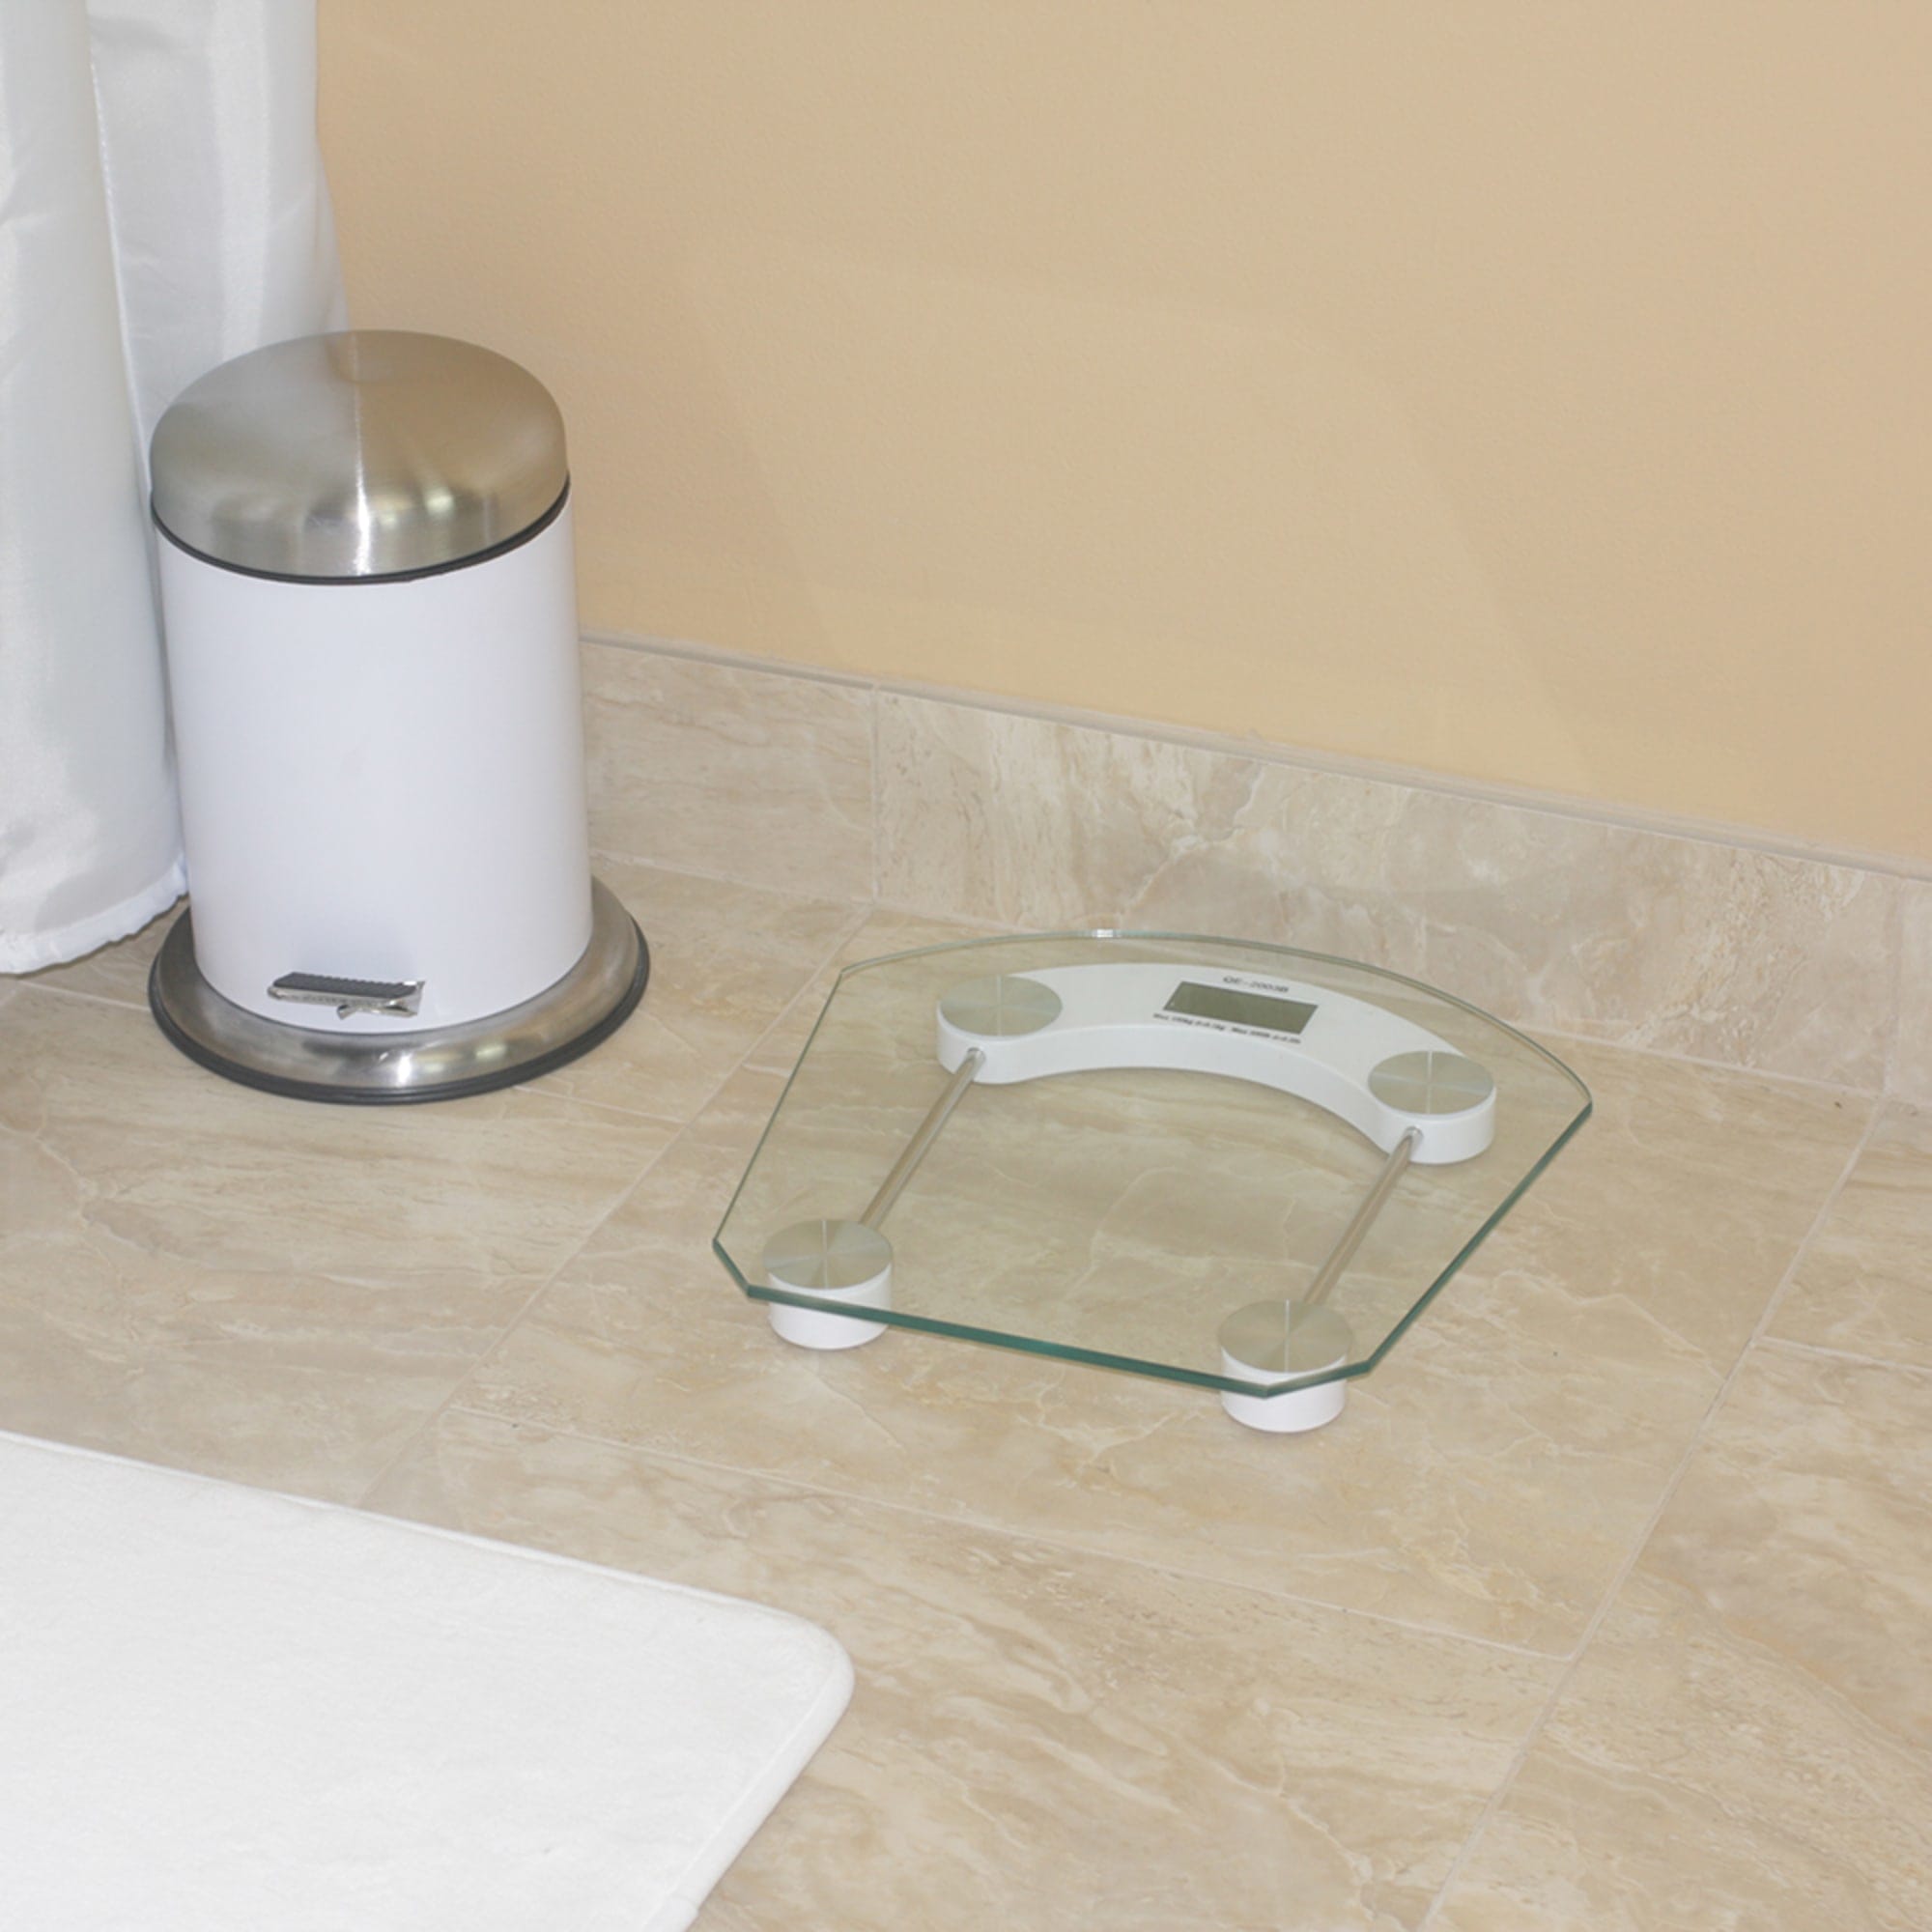 Home Basics Non-Skid Mechanical Bathroom Scale, BATH ORGANIZATION